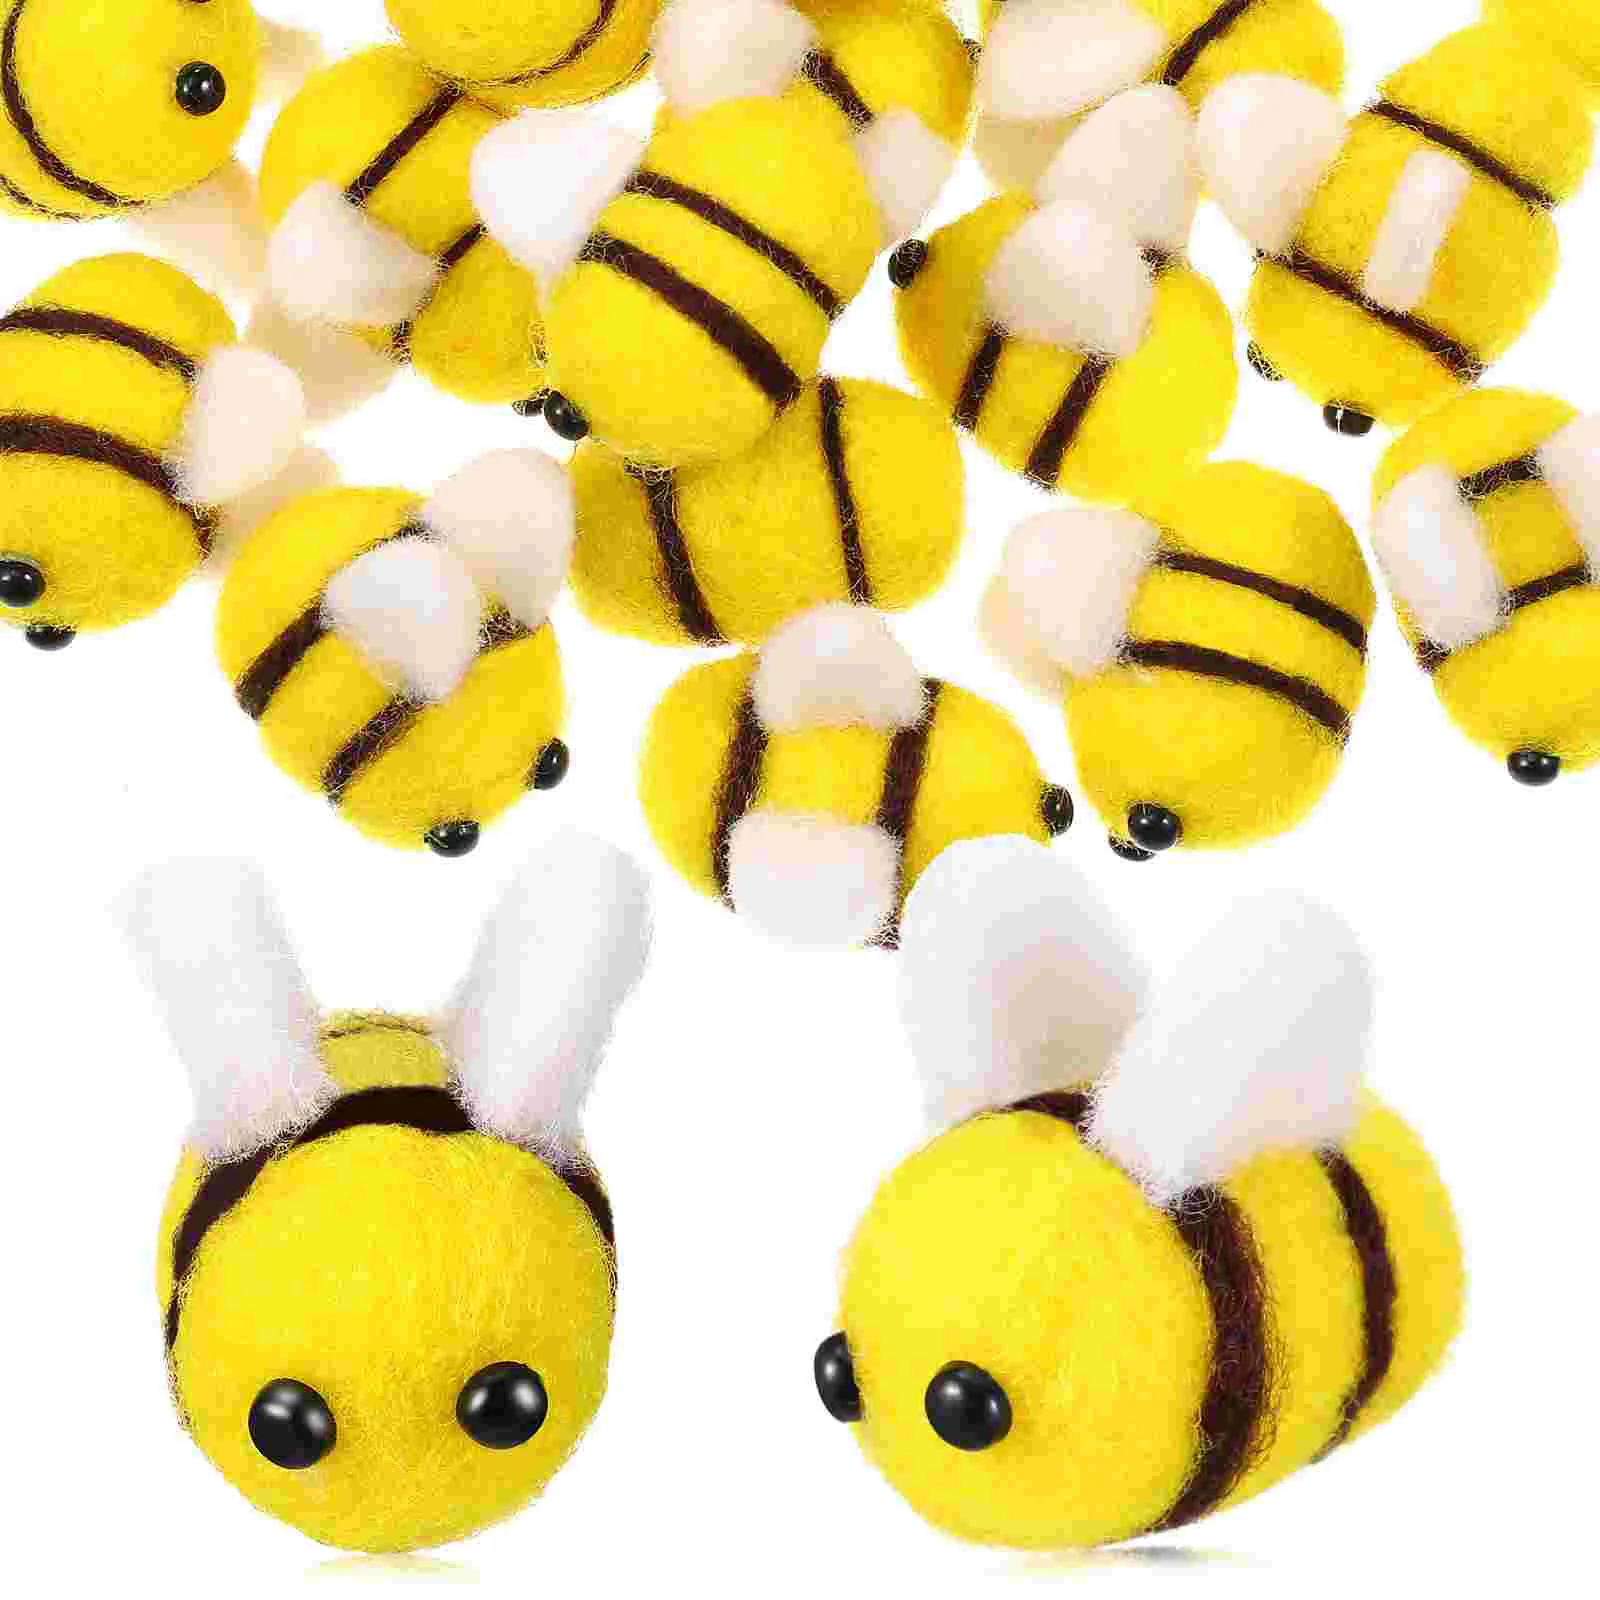 

24 Pcs Stuff Animals Felt Bee Flatback Embellishments Plush Toy Clothes Decor Balls Crafts DIY Hair Accessories Baby